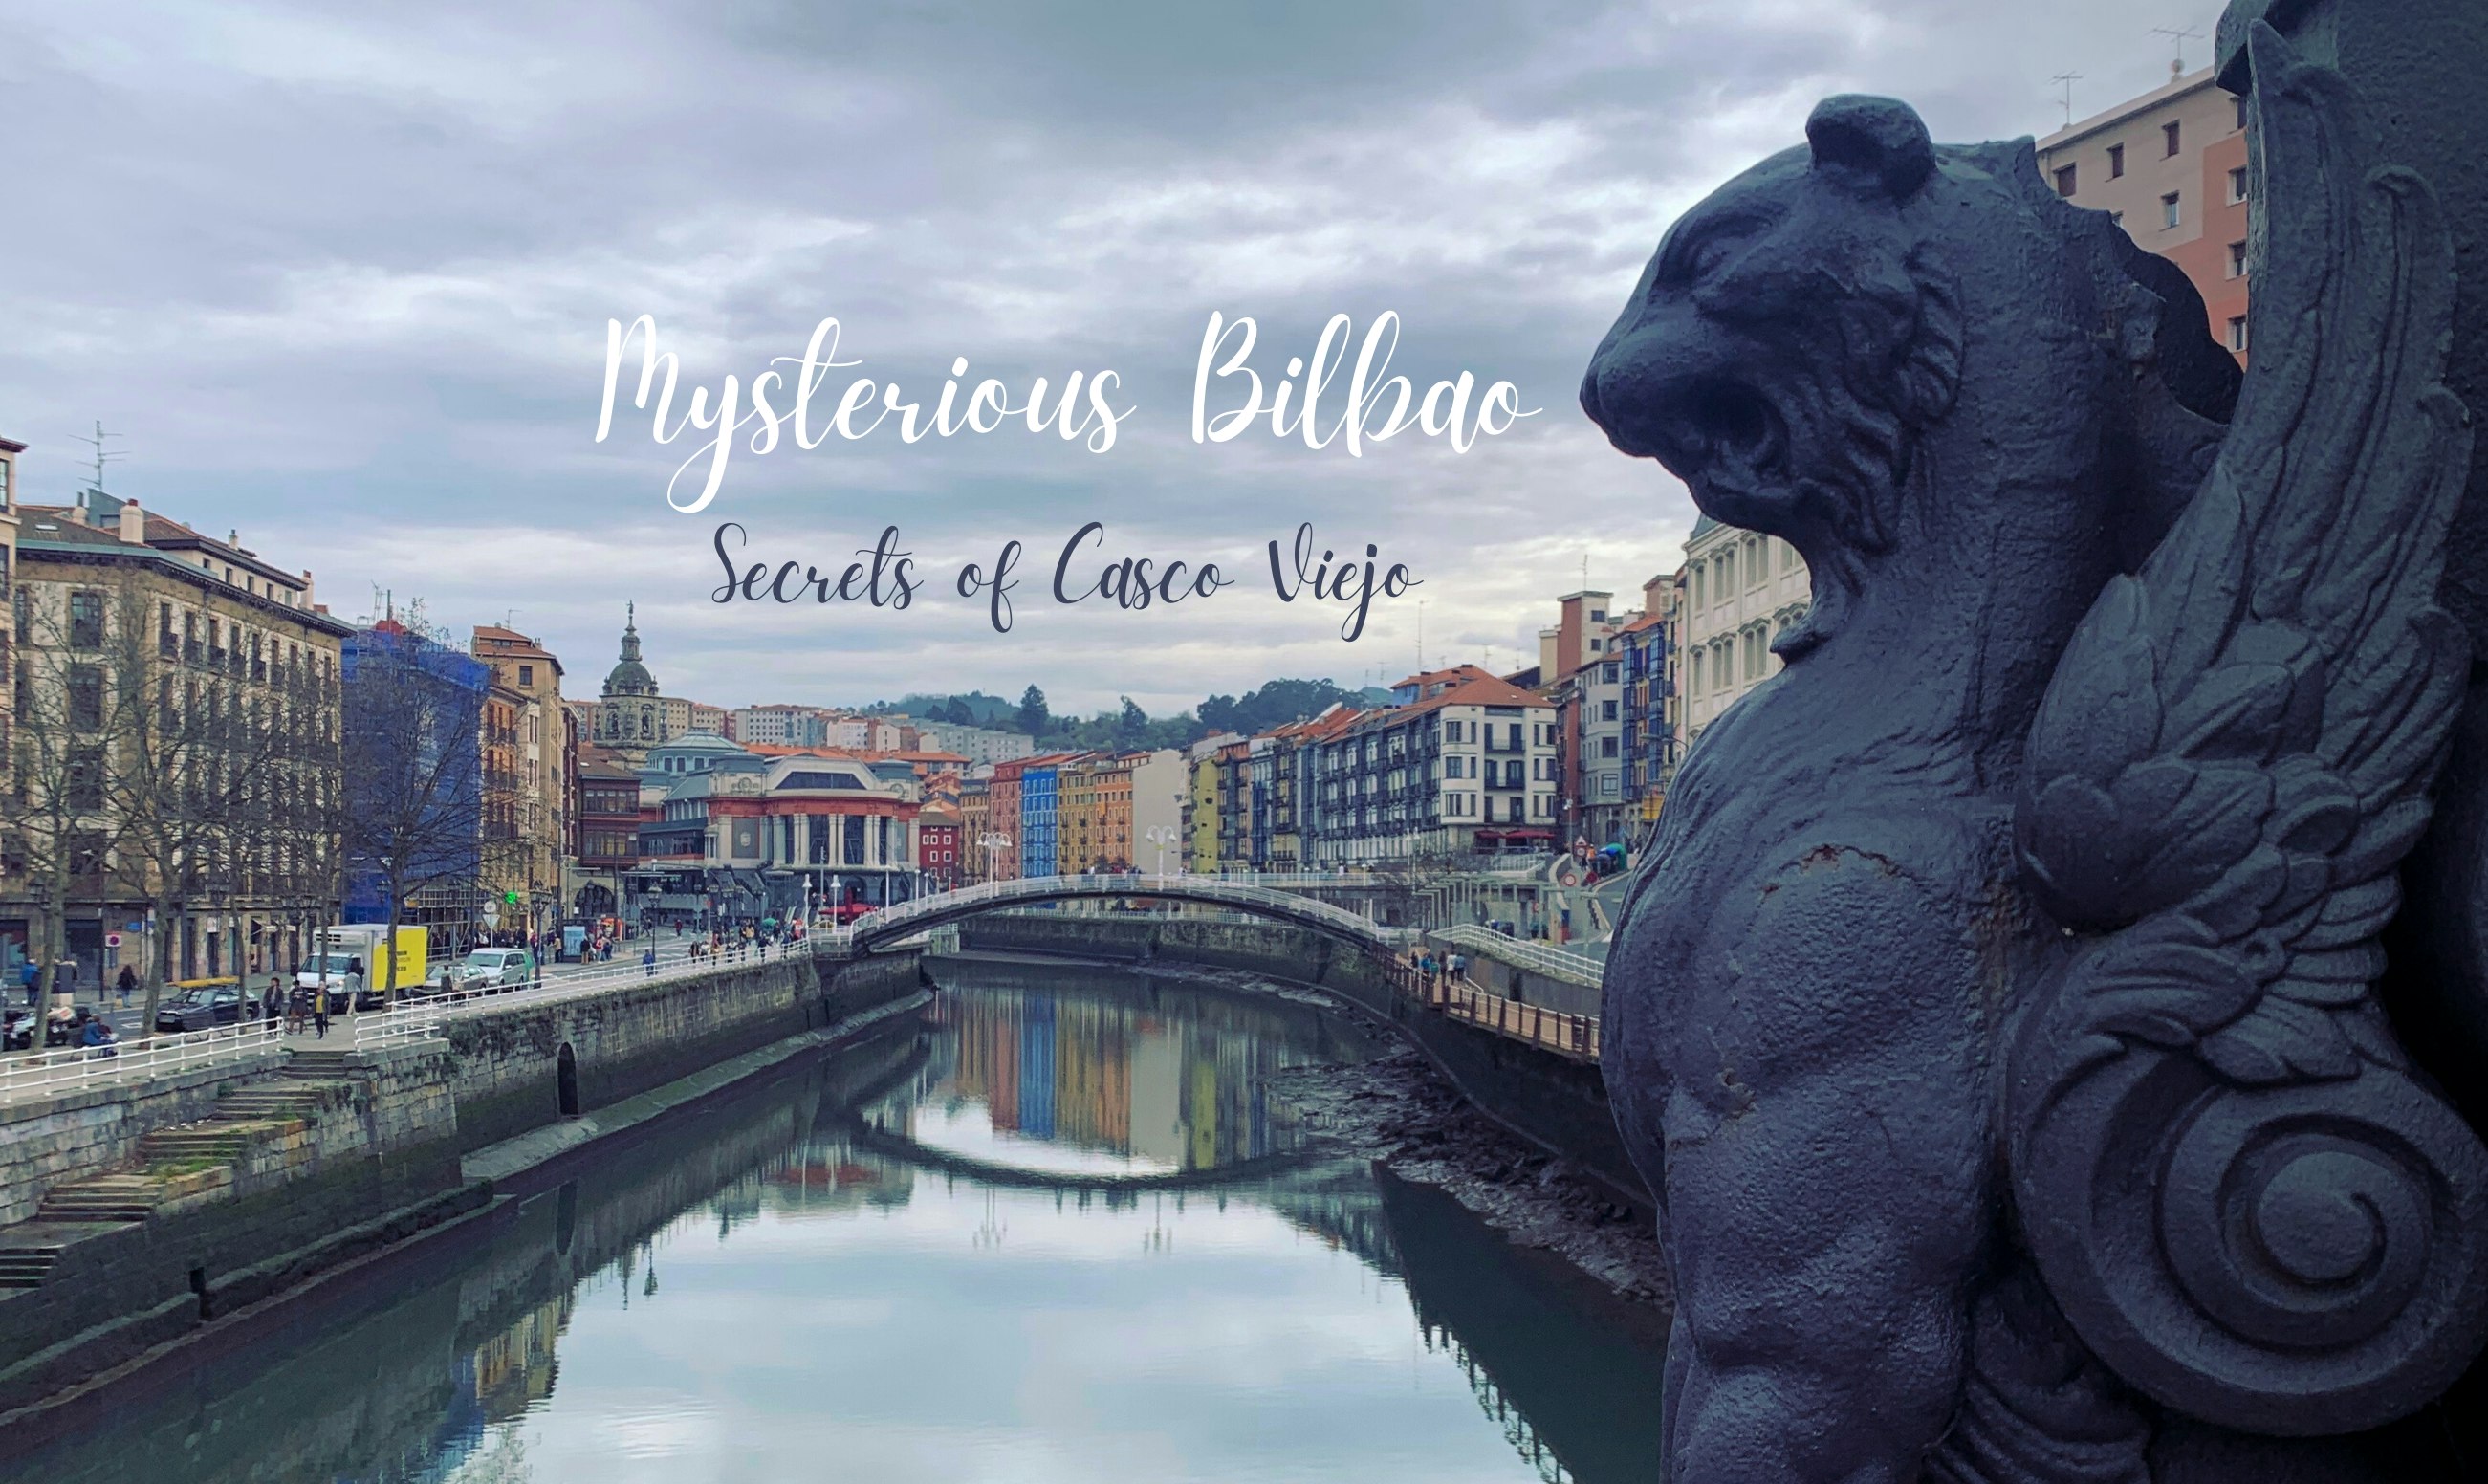 Mysterious Bilbao: Secrets of Casco Viejo